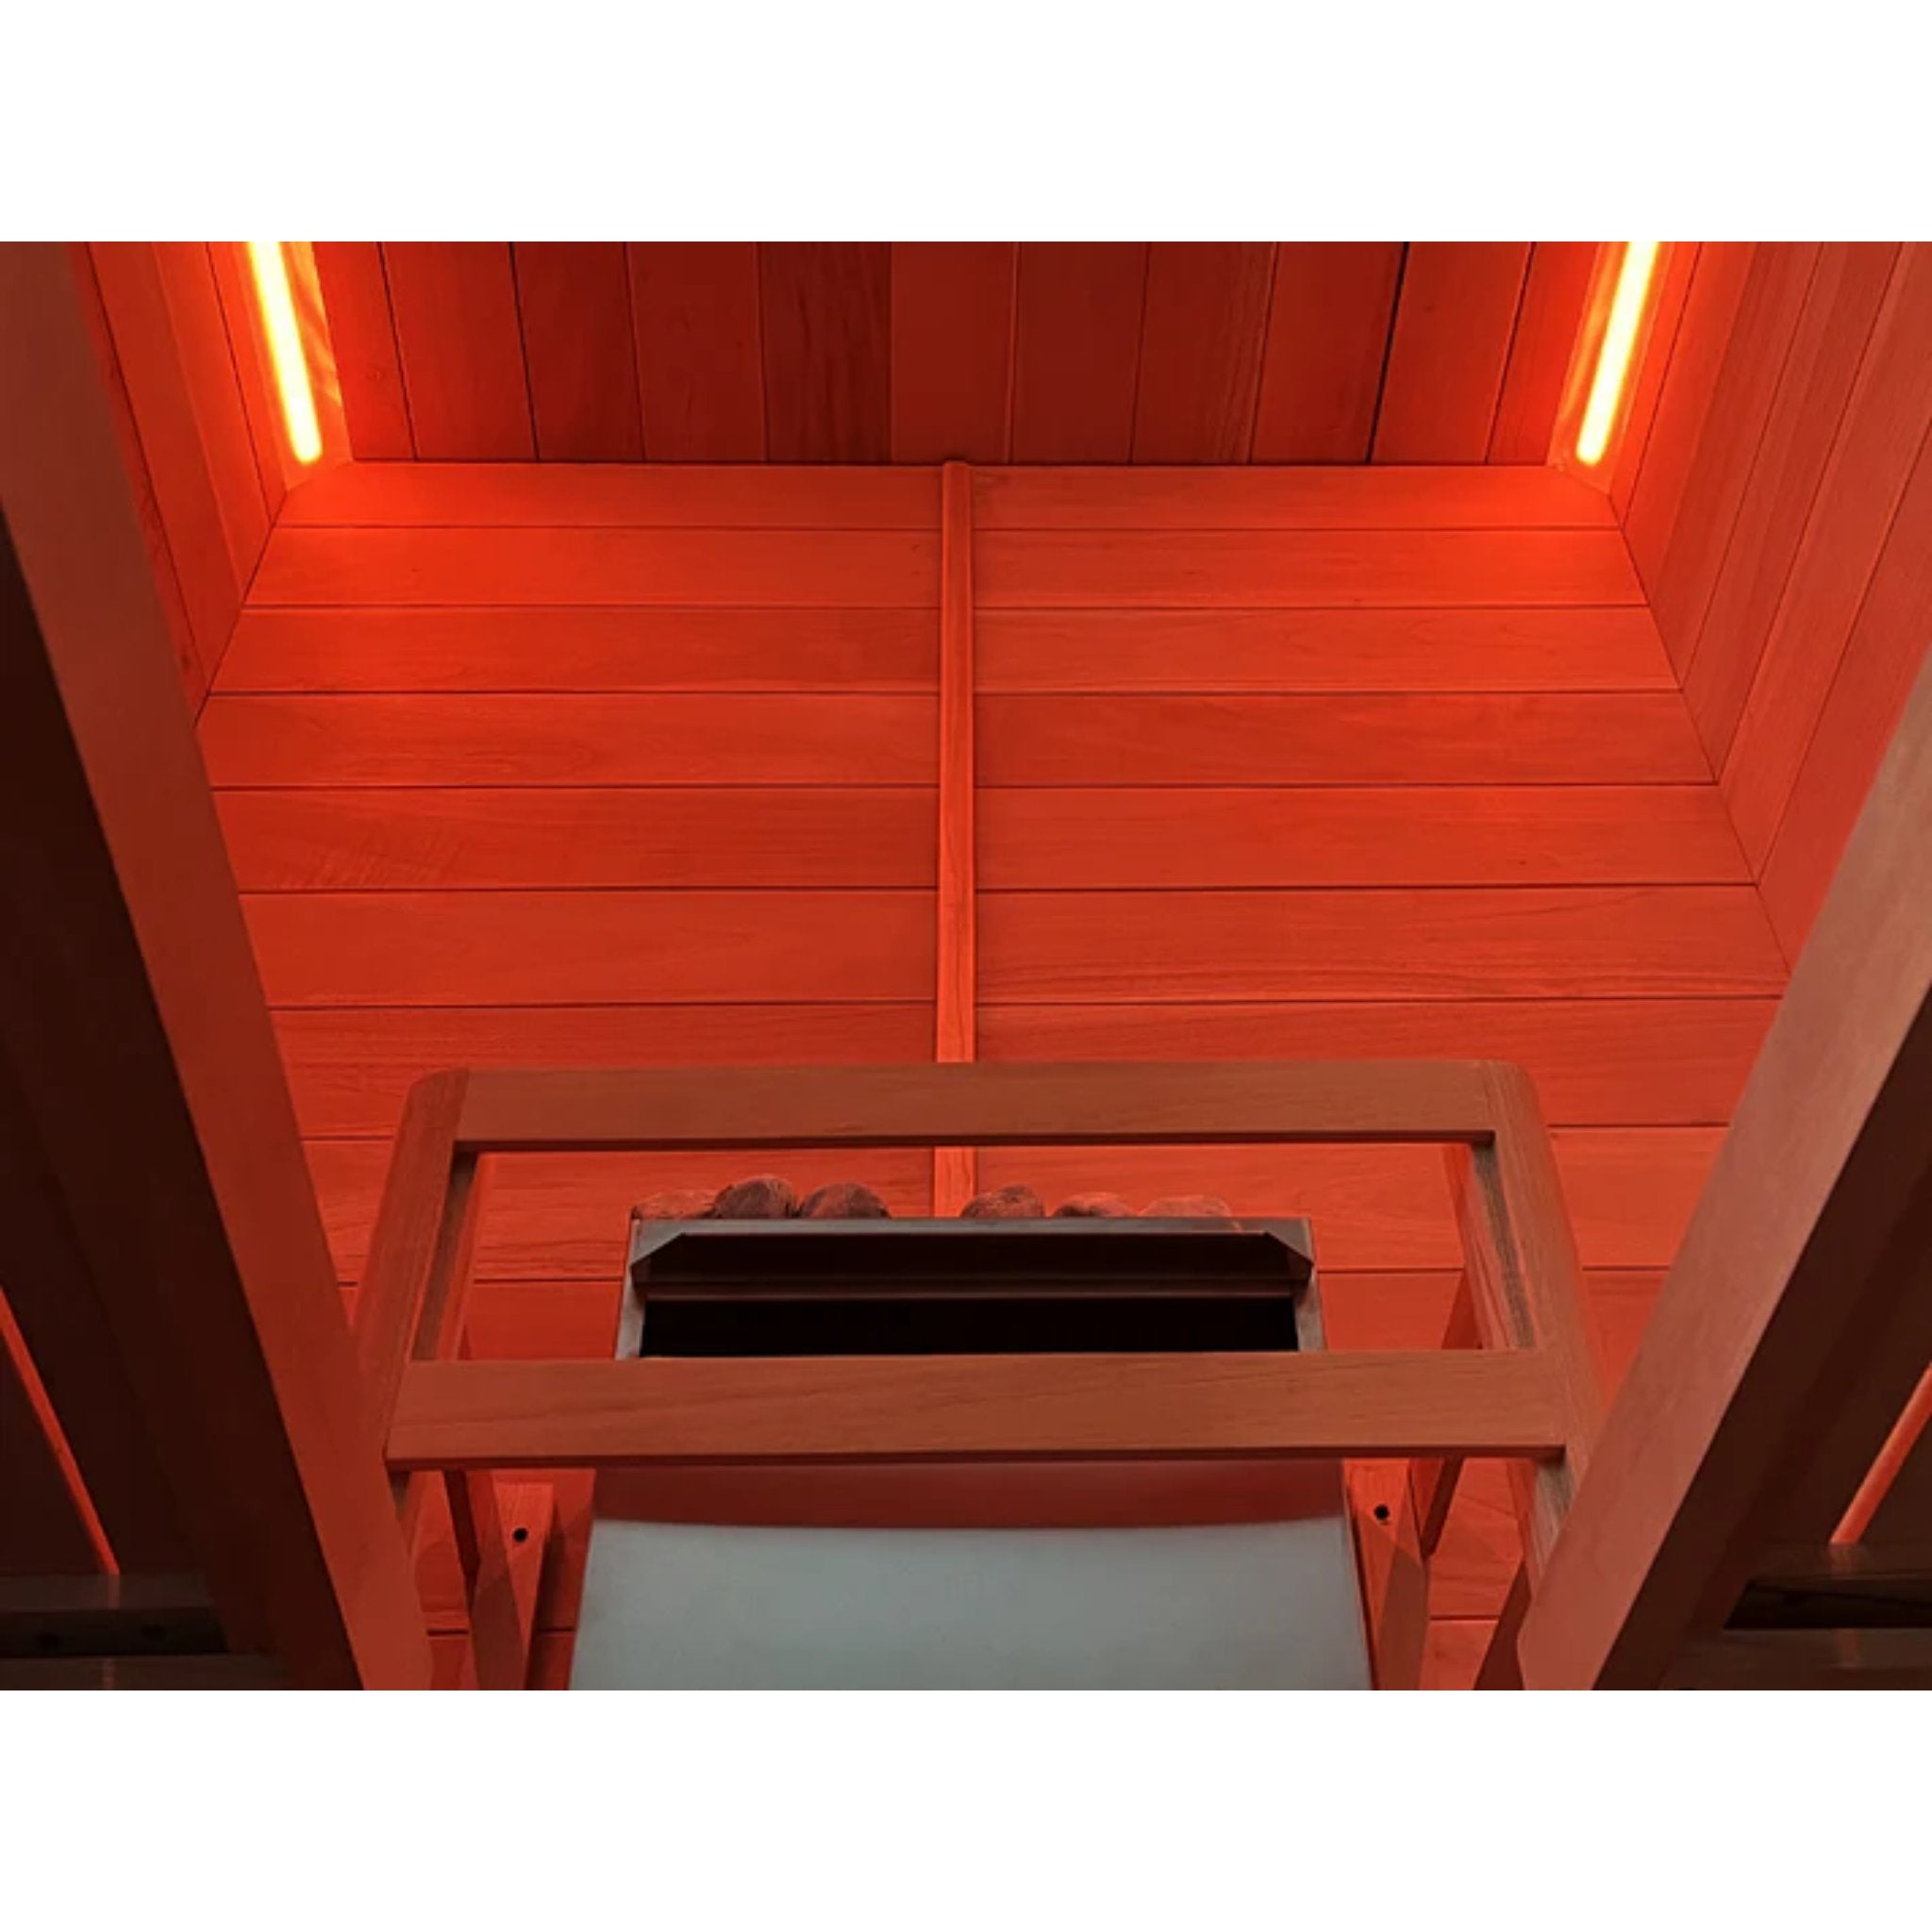 Scandia Electric Ultra Sauna Heater - Small (3.0-4.5KW)